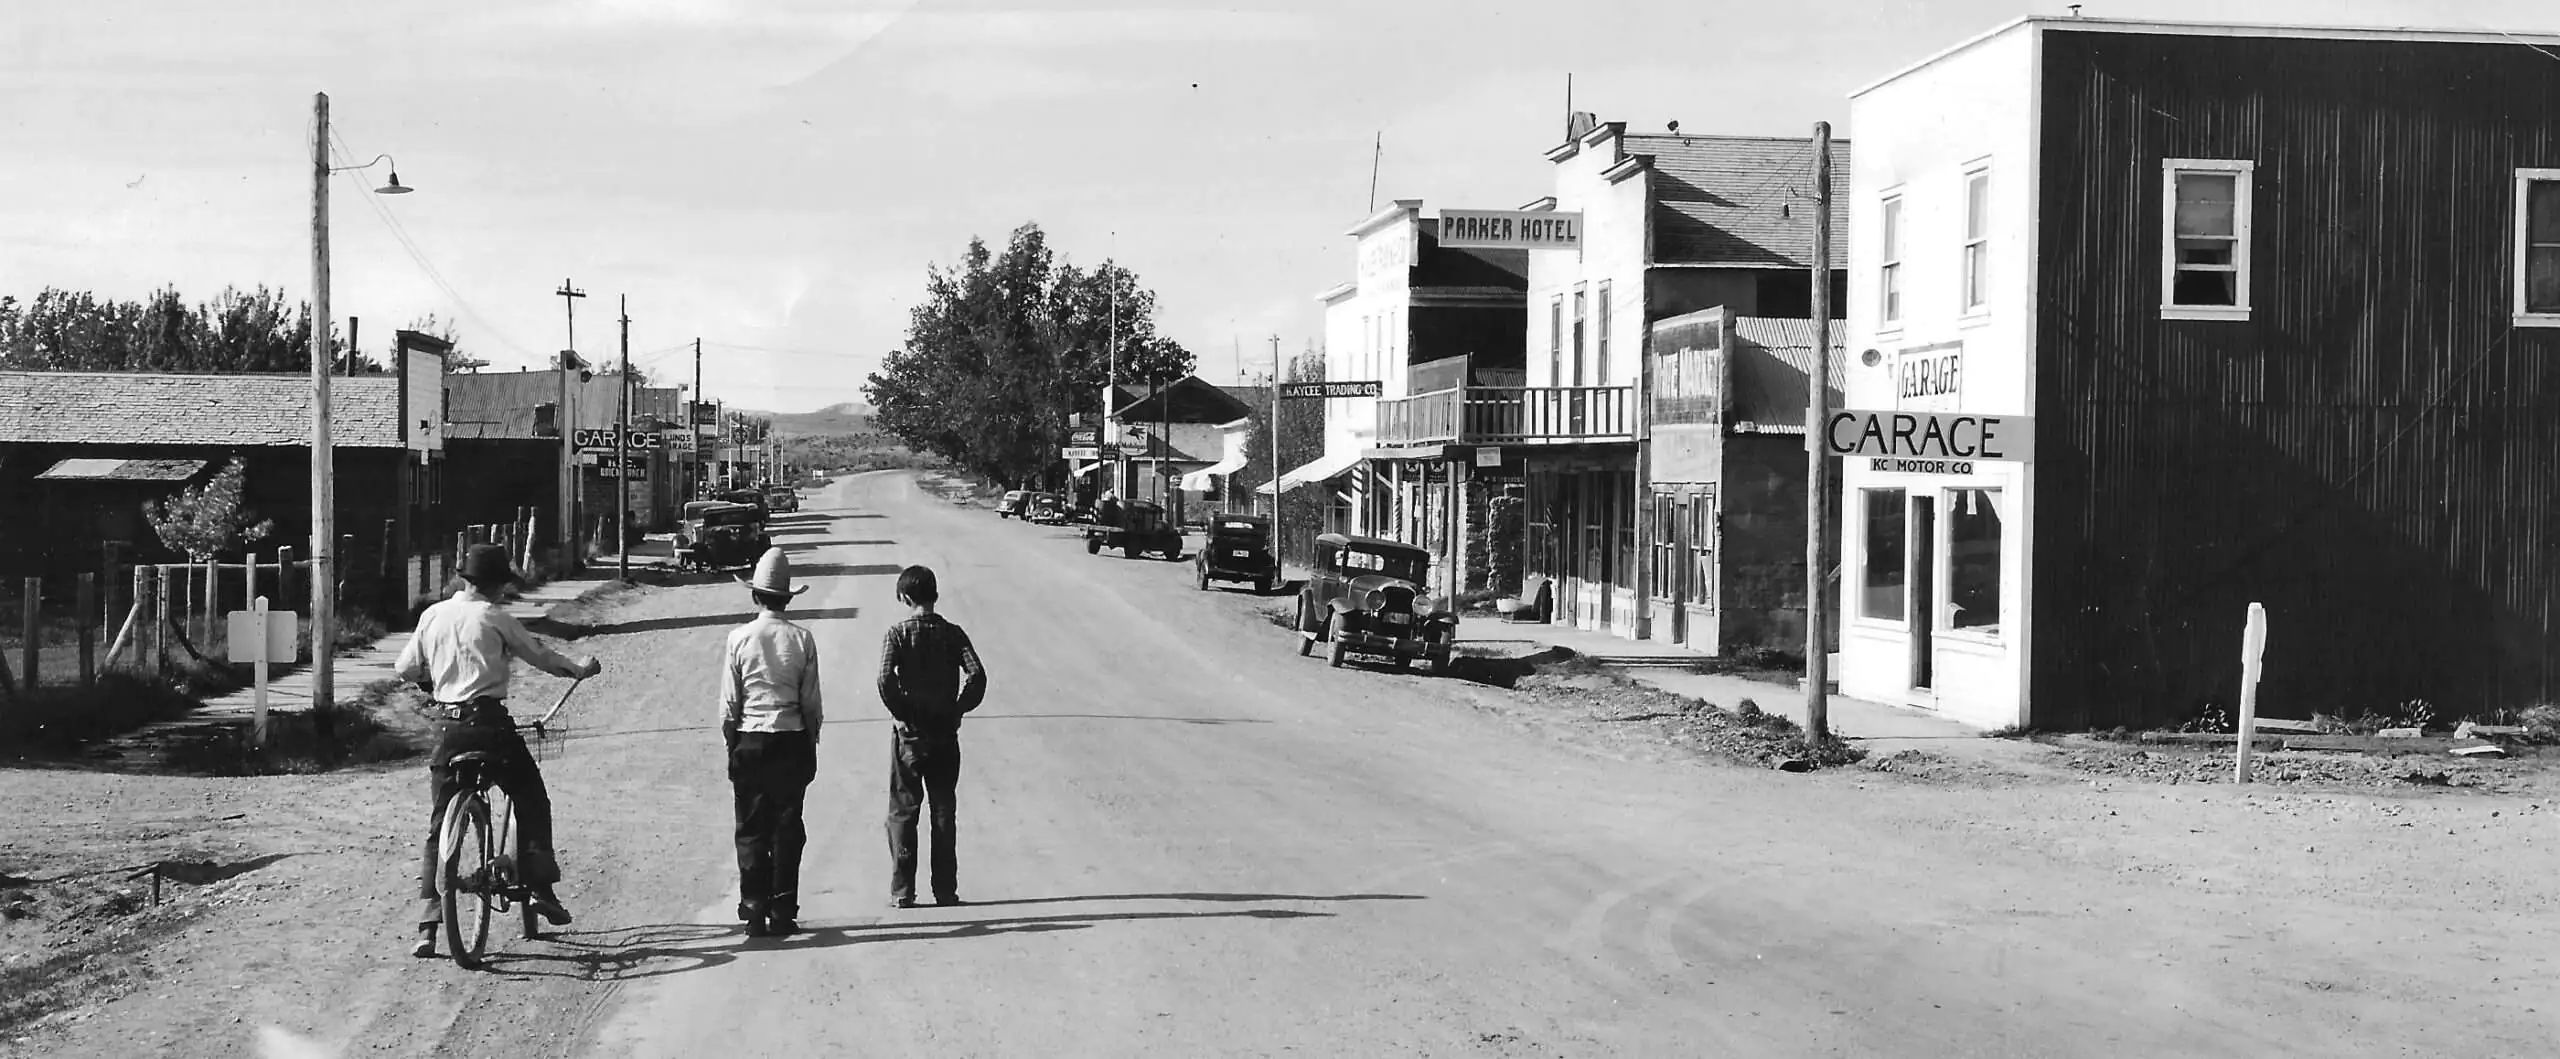 The History of Kaycee, Wyoming